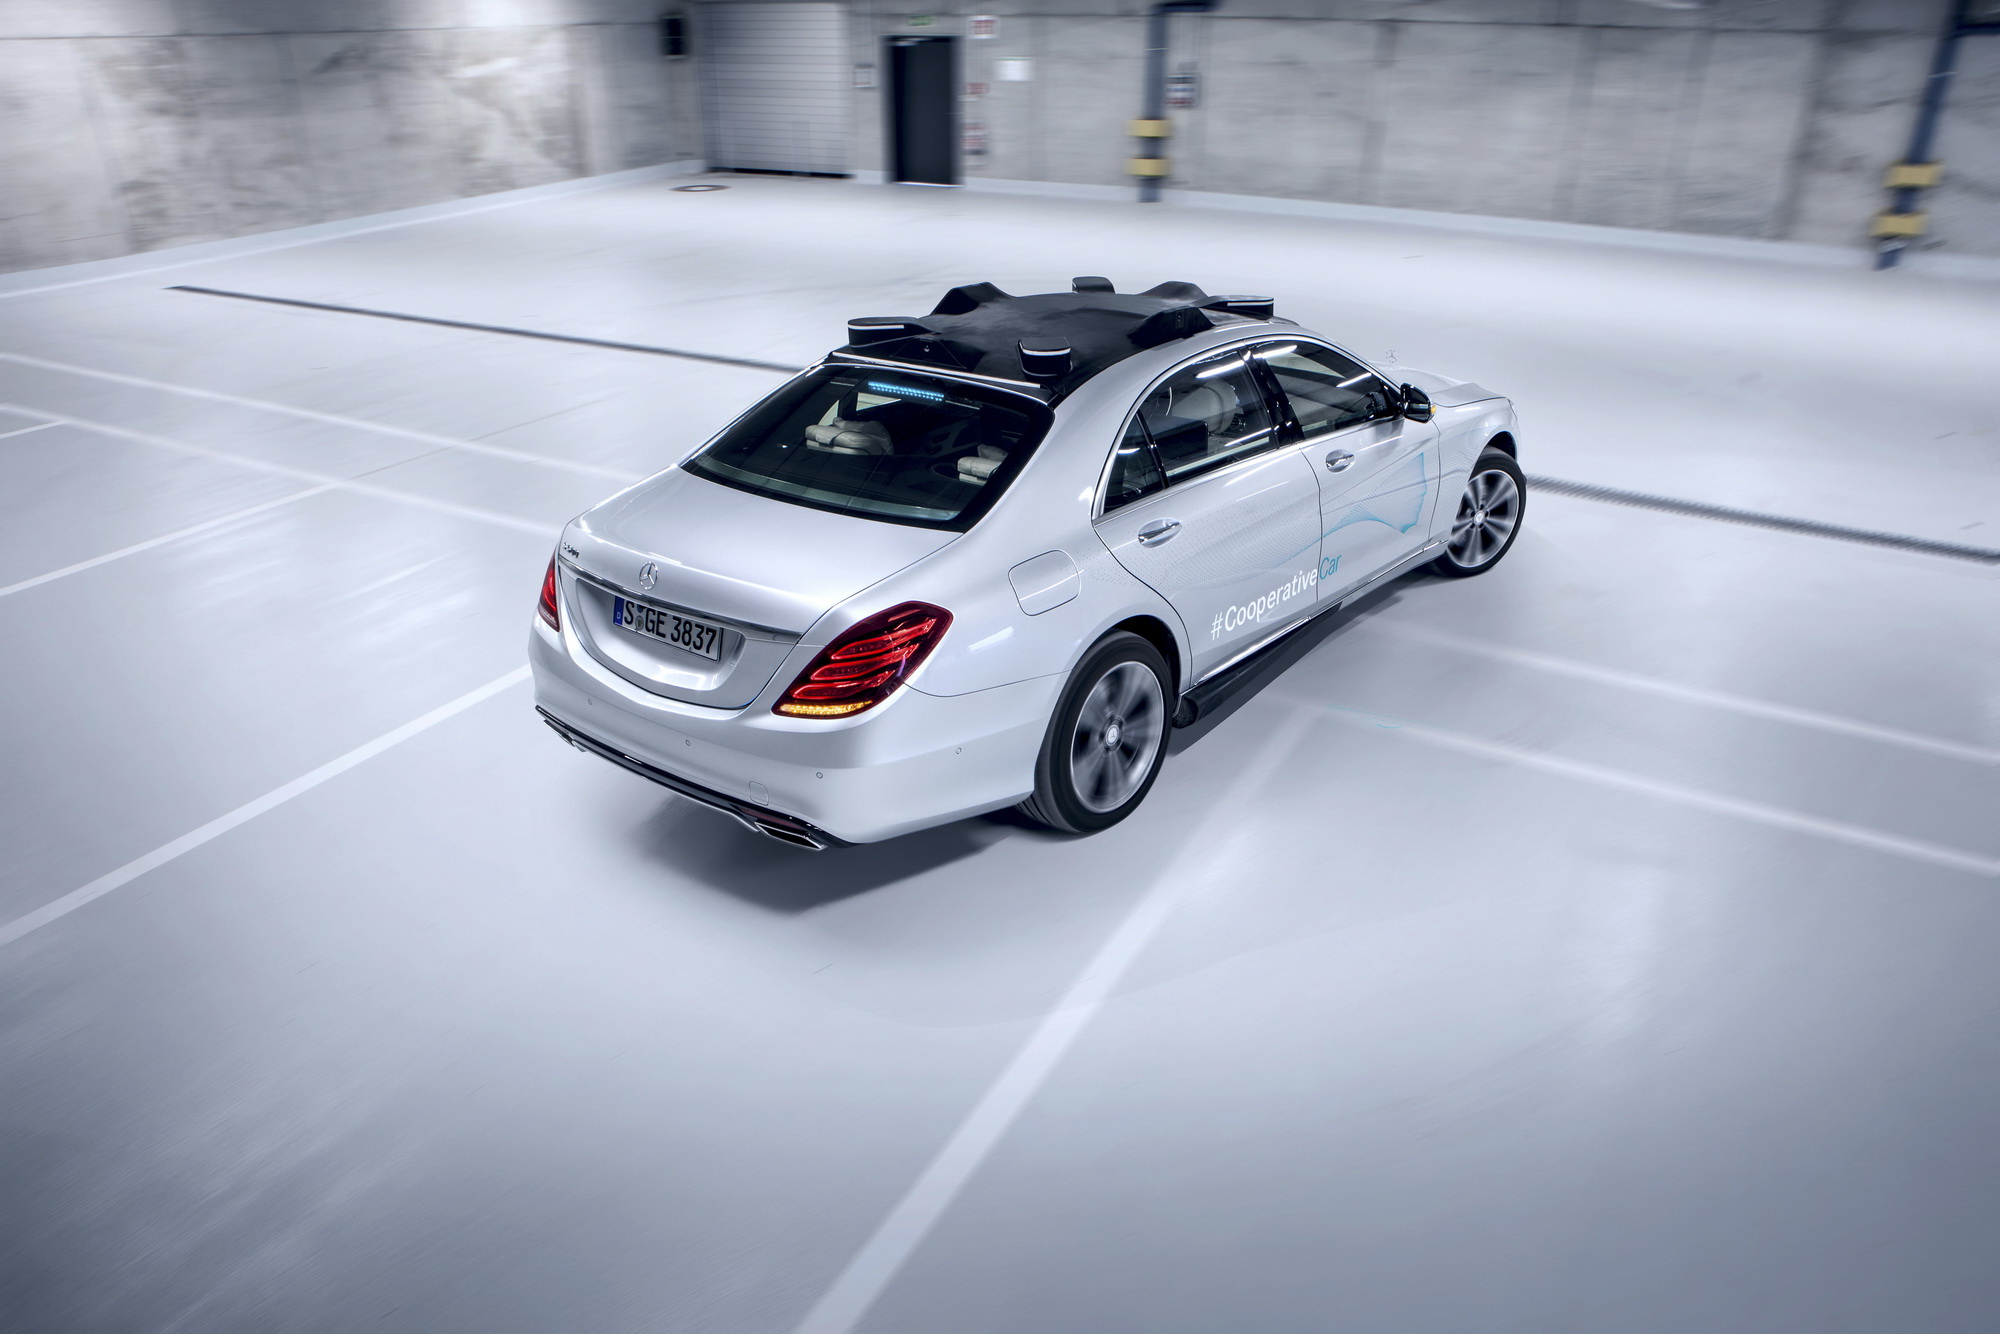 Mercedes-Benz cooperating vehicle